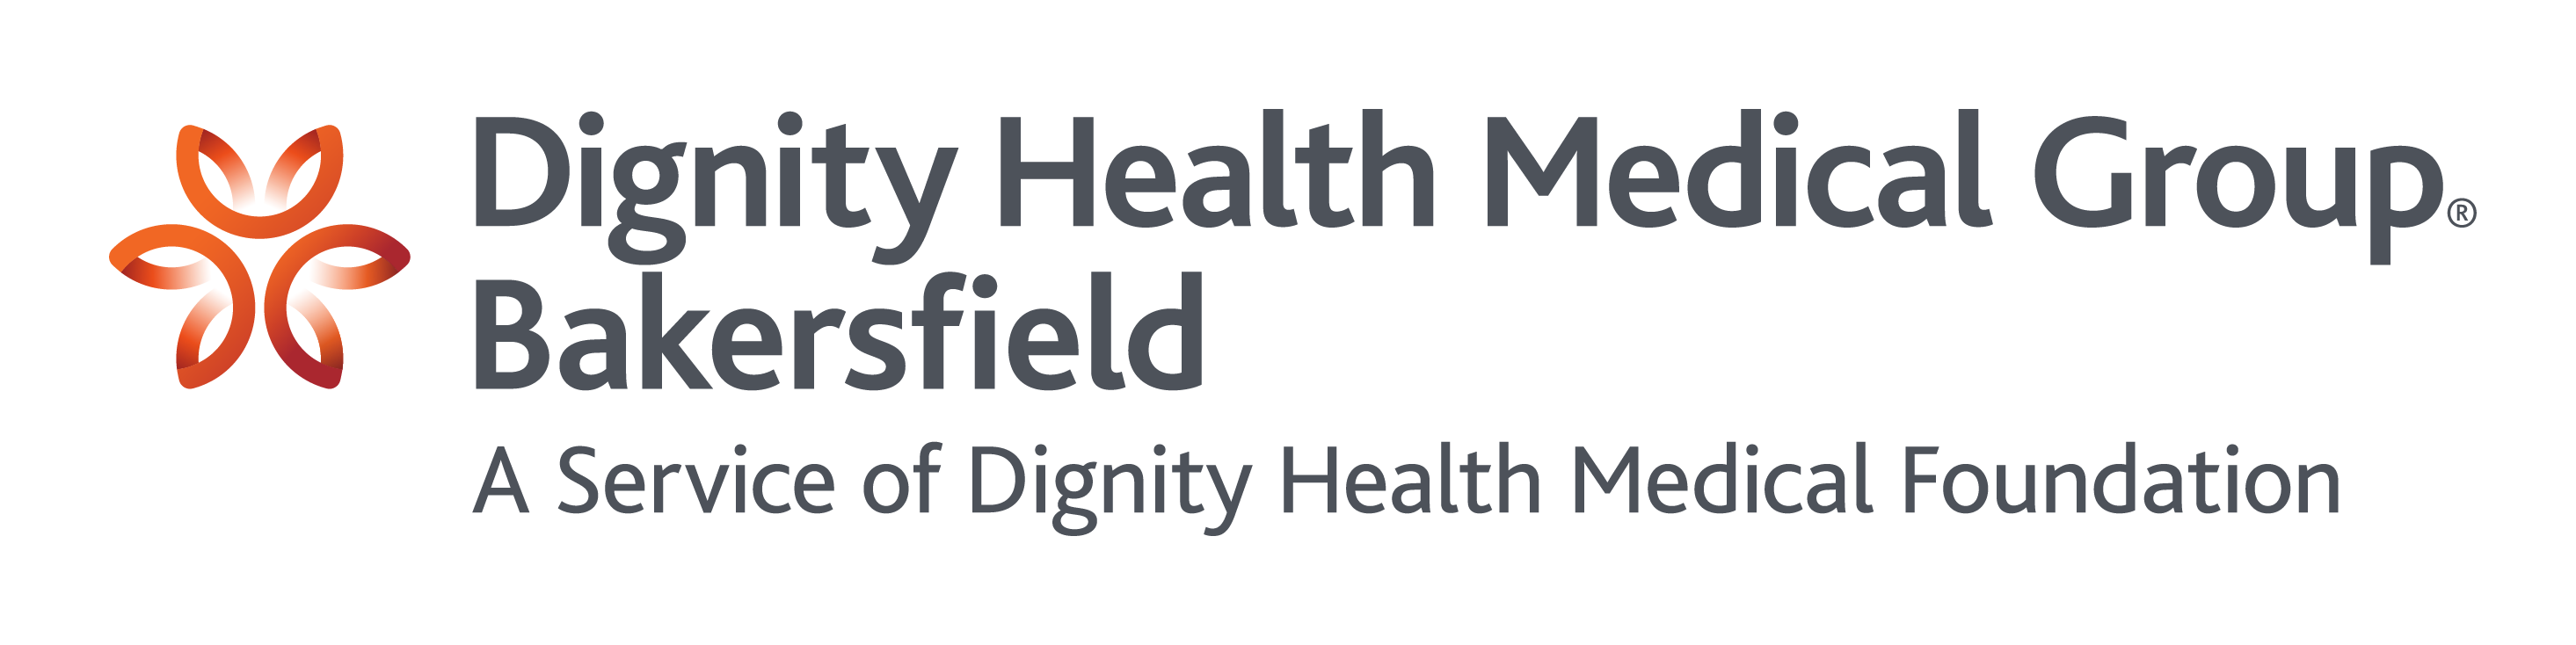 Dignity Health Medical Group - Bakersfield - Bakersfield